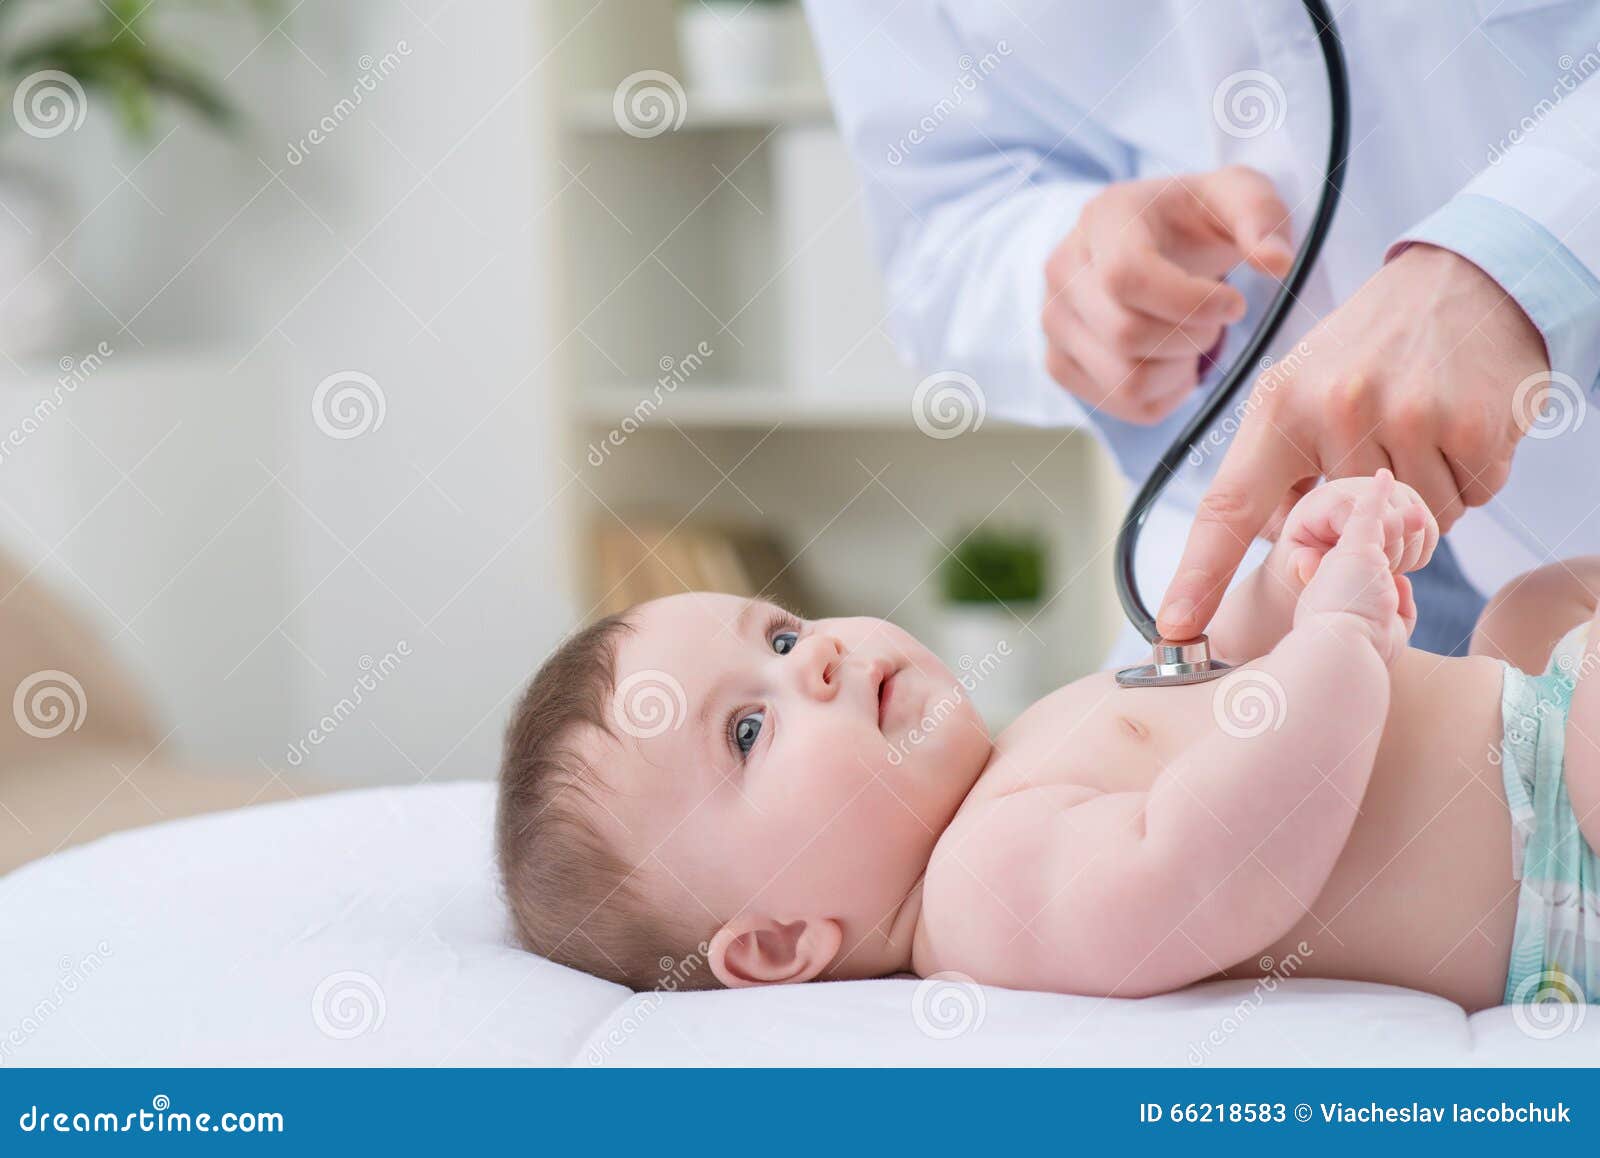 professional pediatrician examining infant